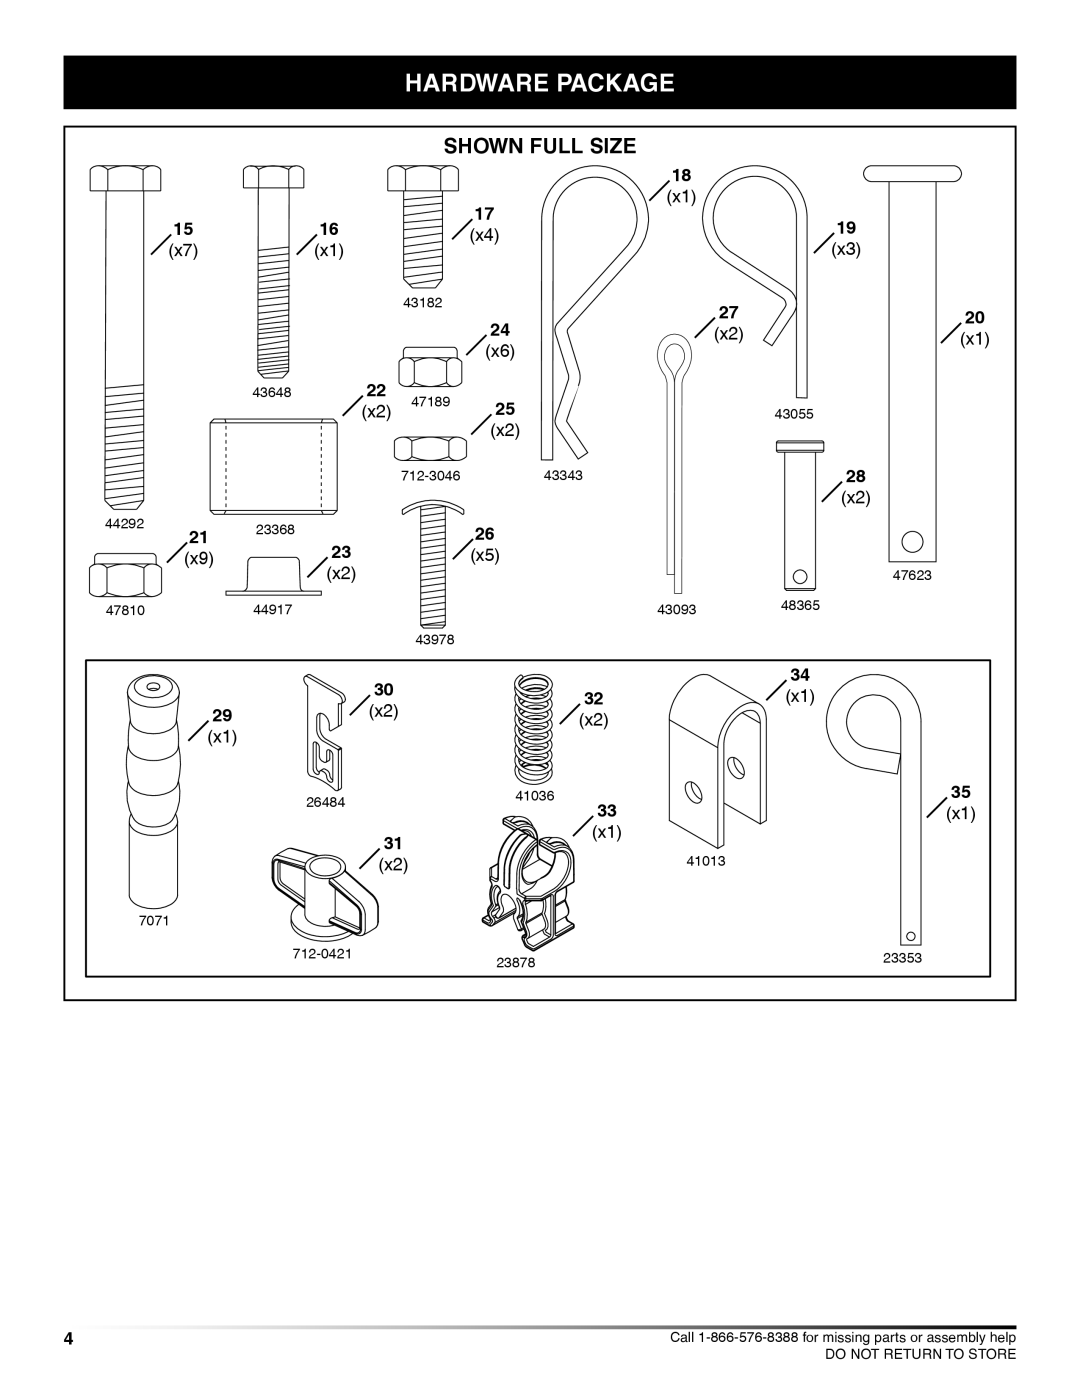 Craftsman 486.24229 manual hardware package, shown full size 